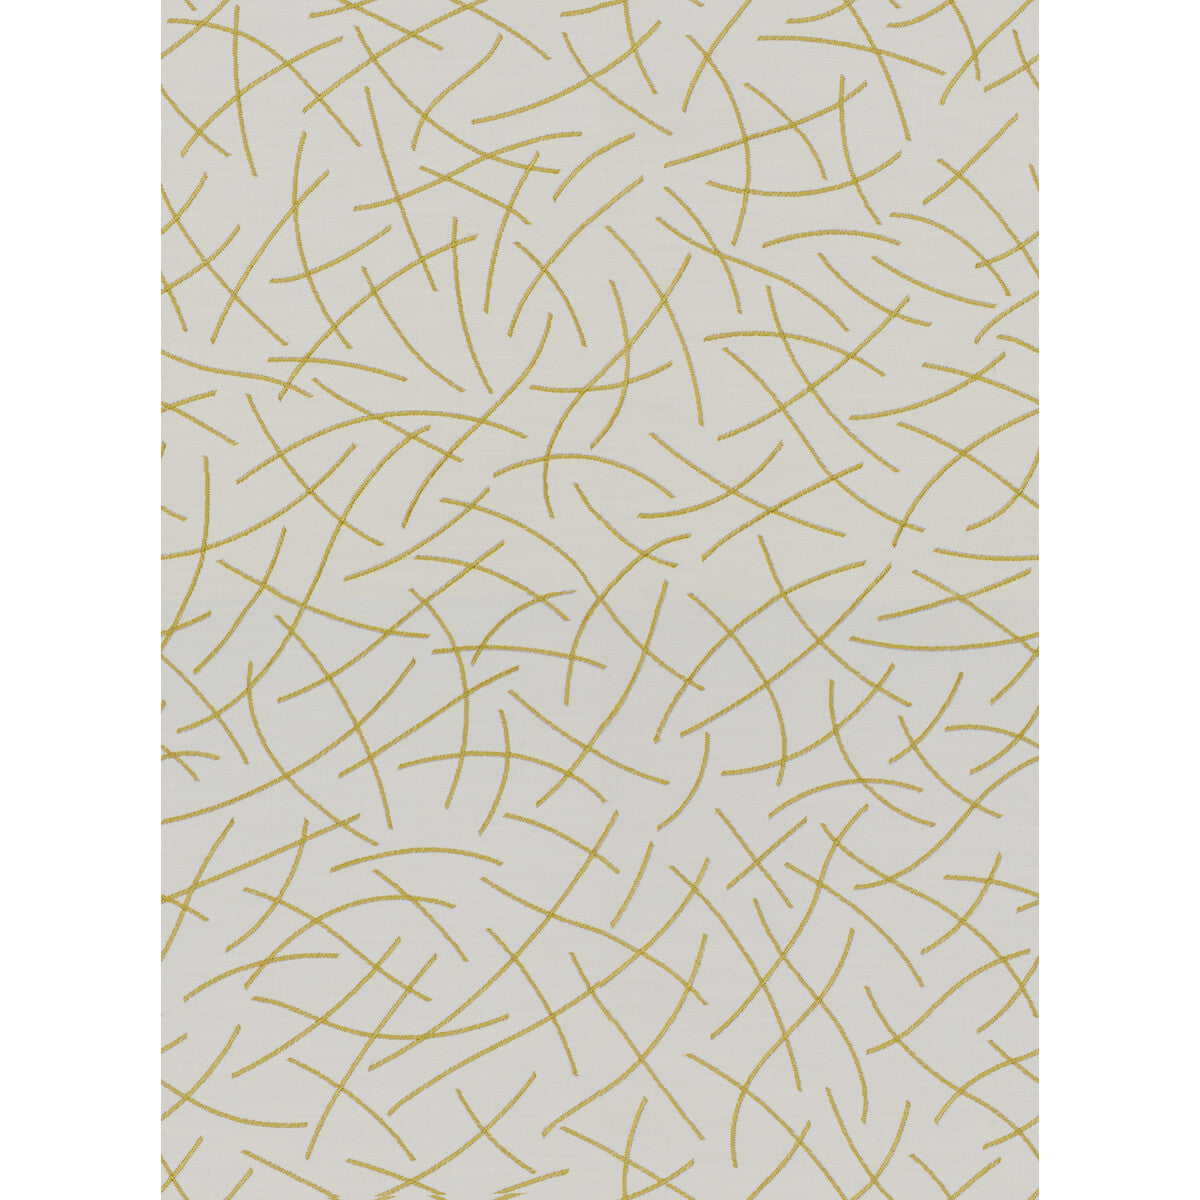 Stringart fabric in citrine color - pattern 34607.4.0 - by Kravet Design